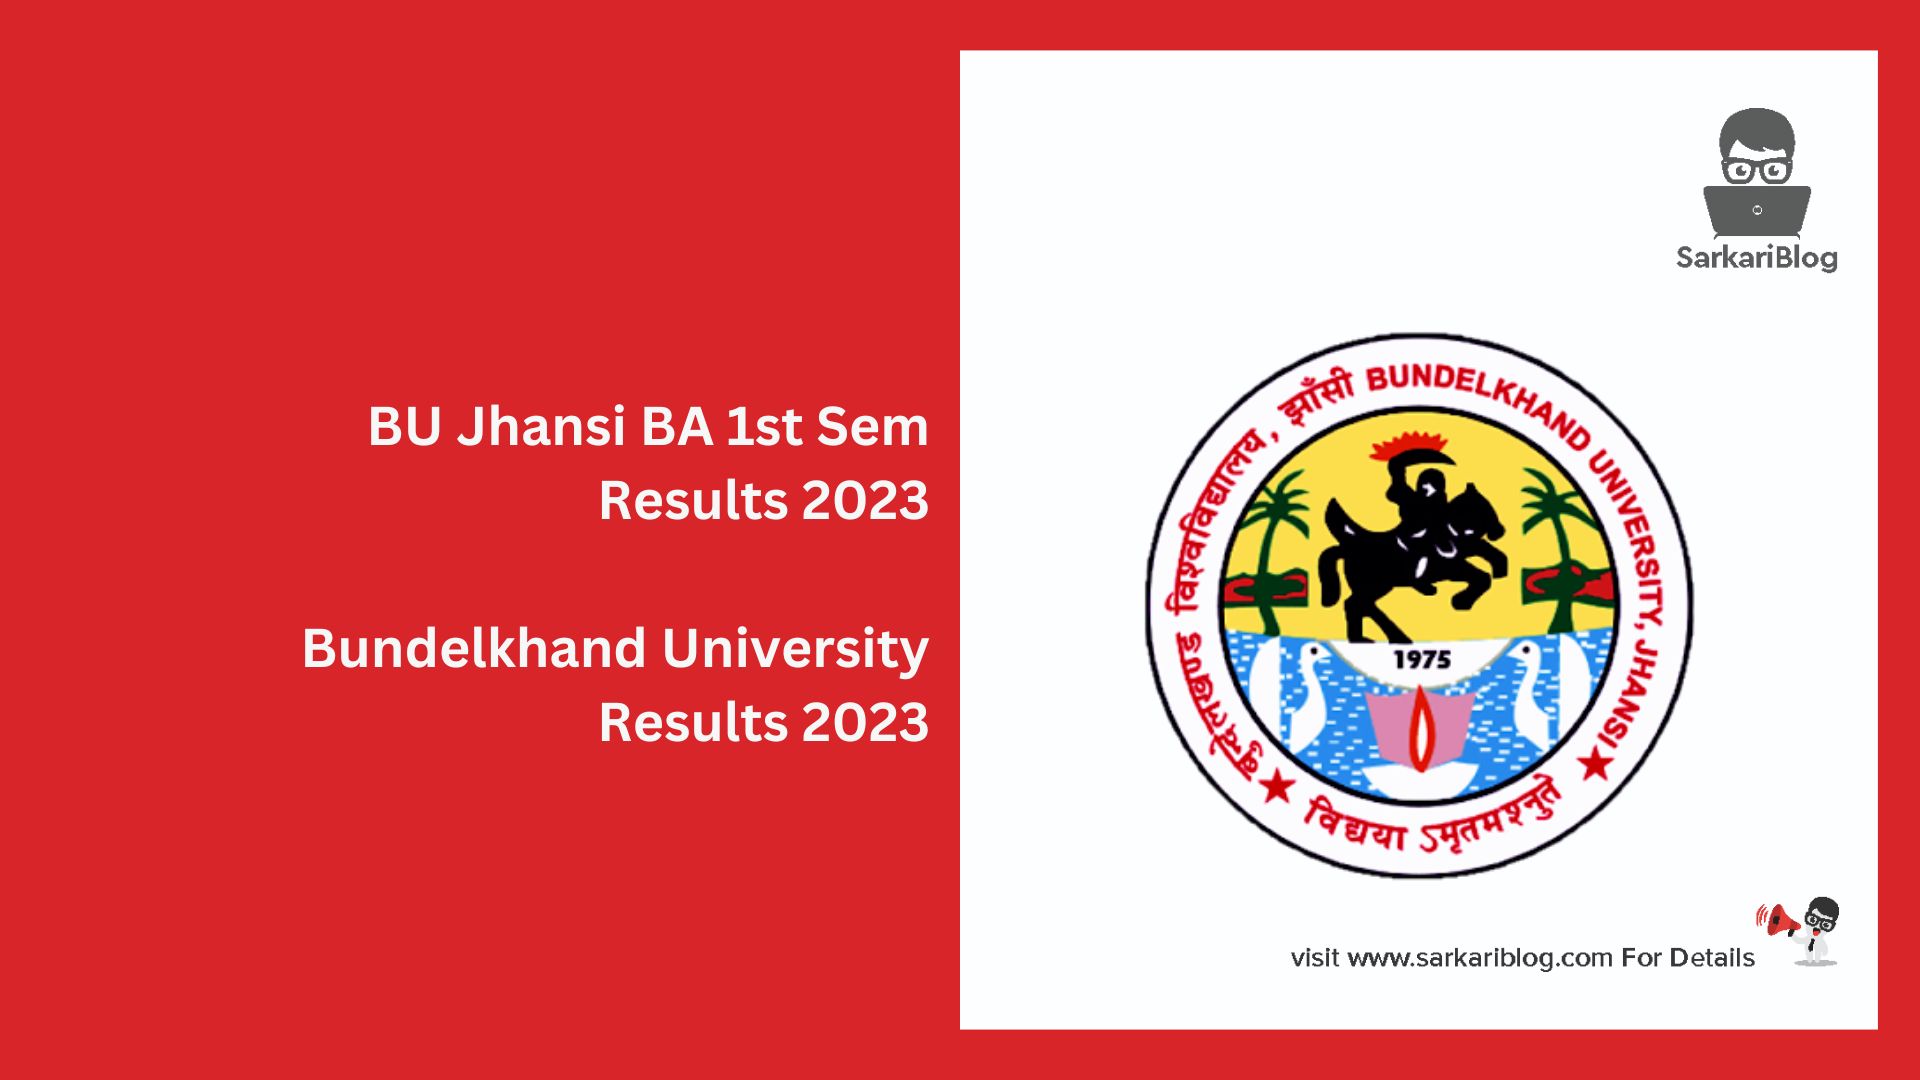 BU Jhansi BA 1st Sem Results 2023